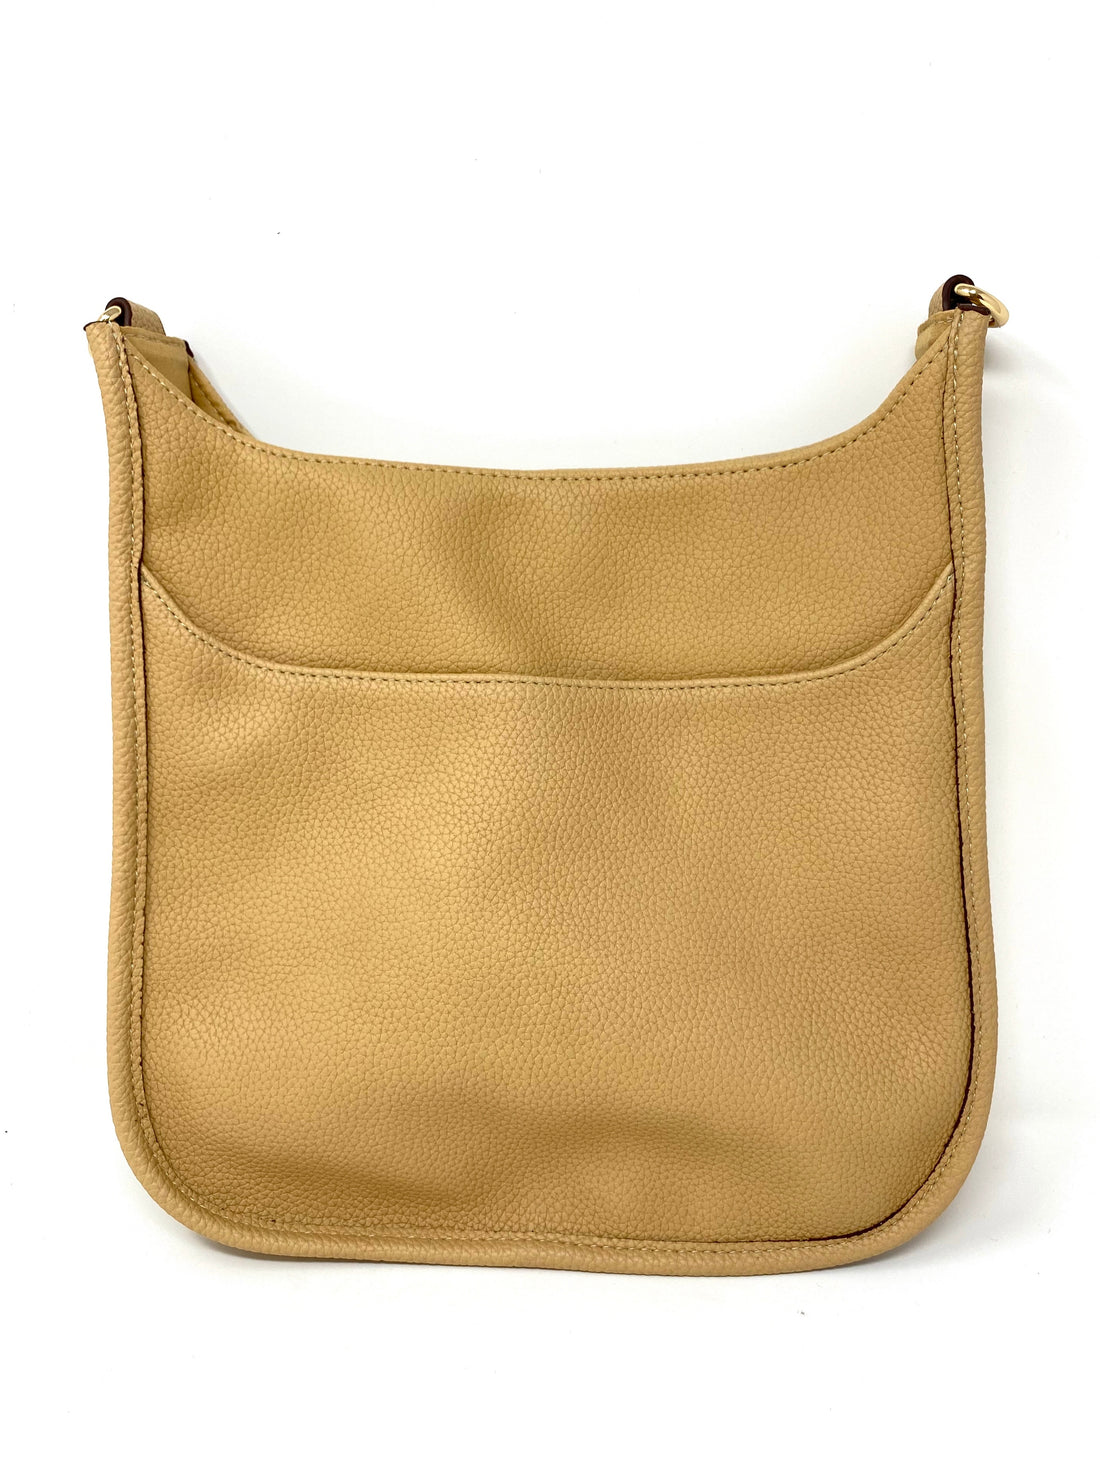 Saddle Bag in Vegan Leather in Tan